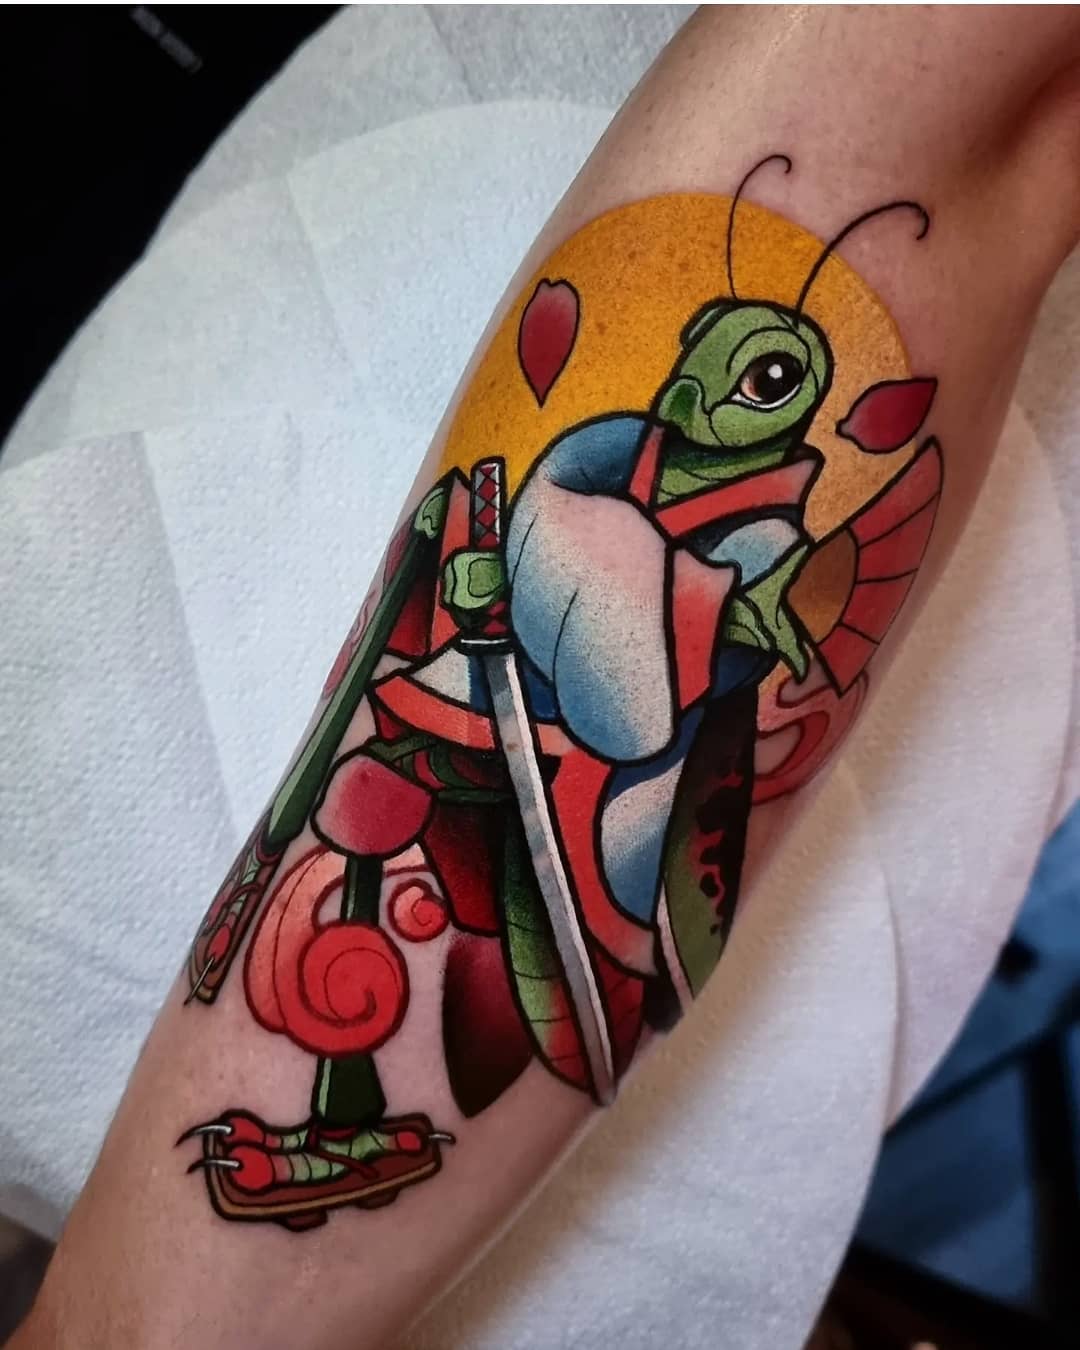 Grasshopper tattoo by stevenblance